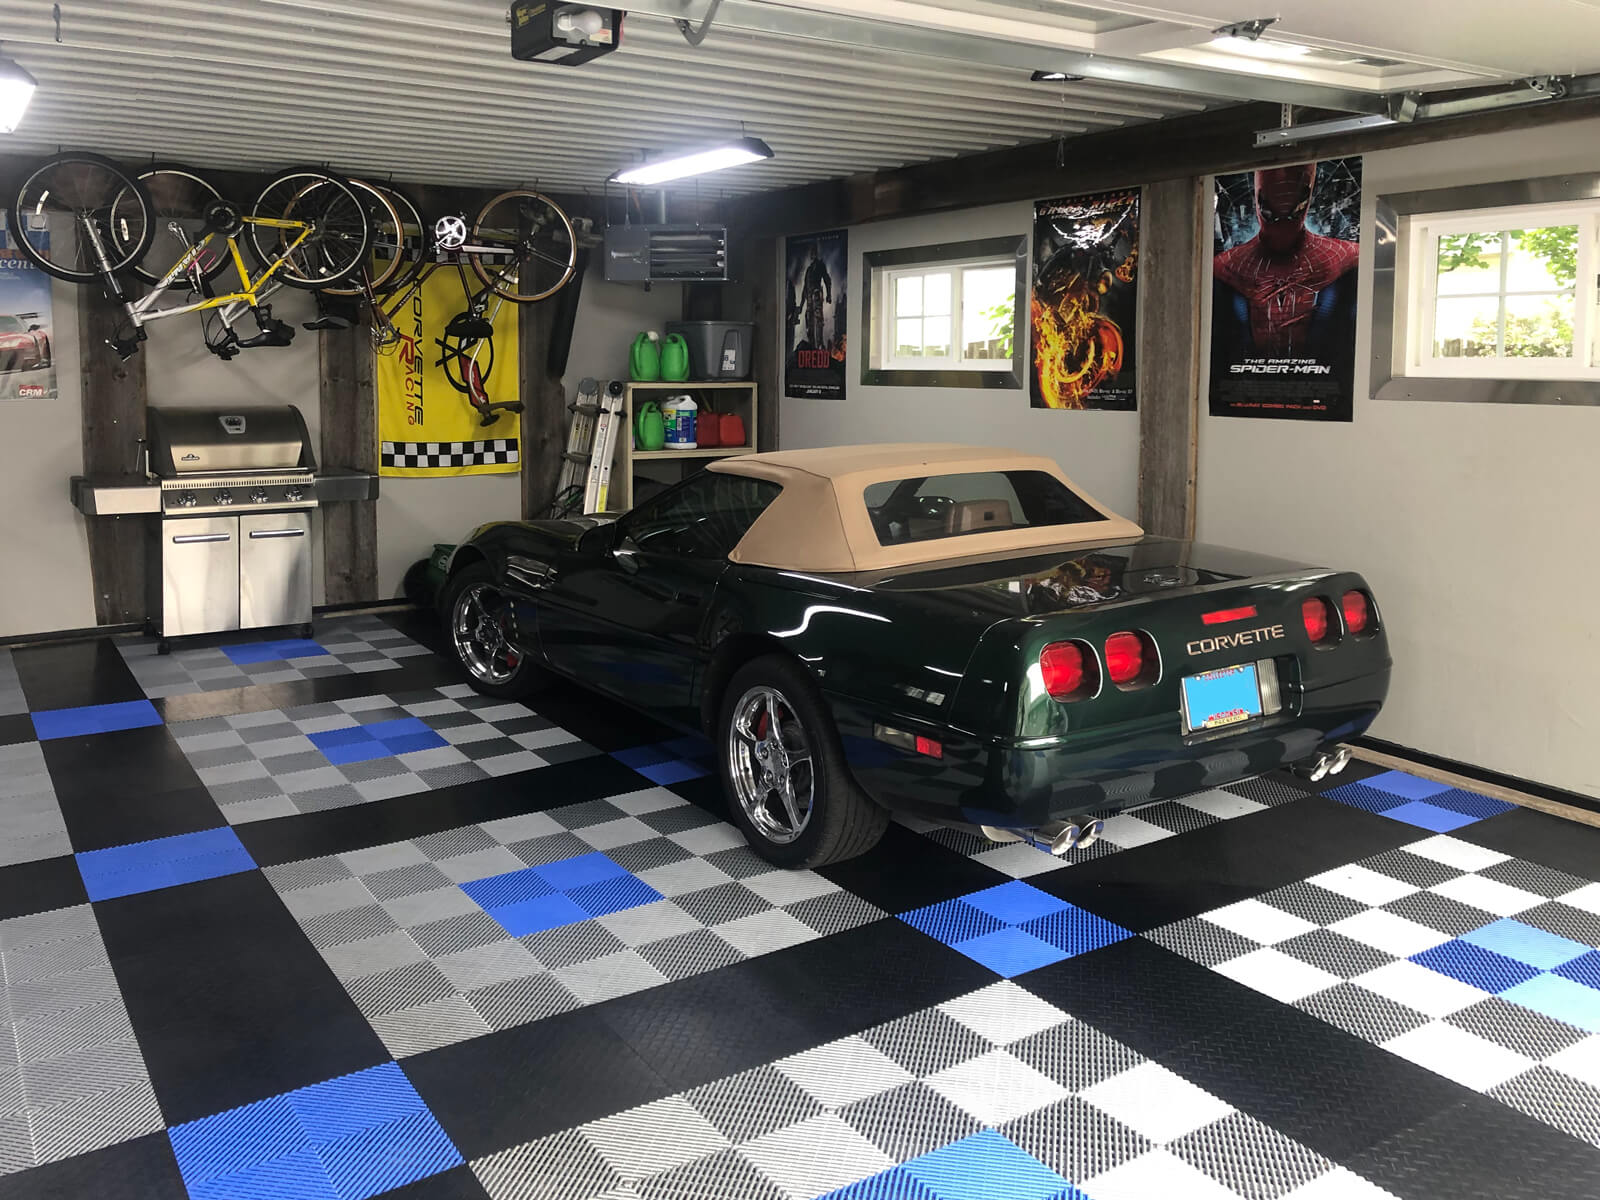 Michael's Free-Flow and Diamond Corvette garage